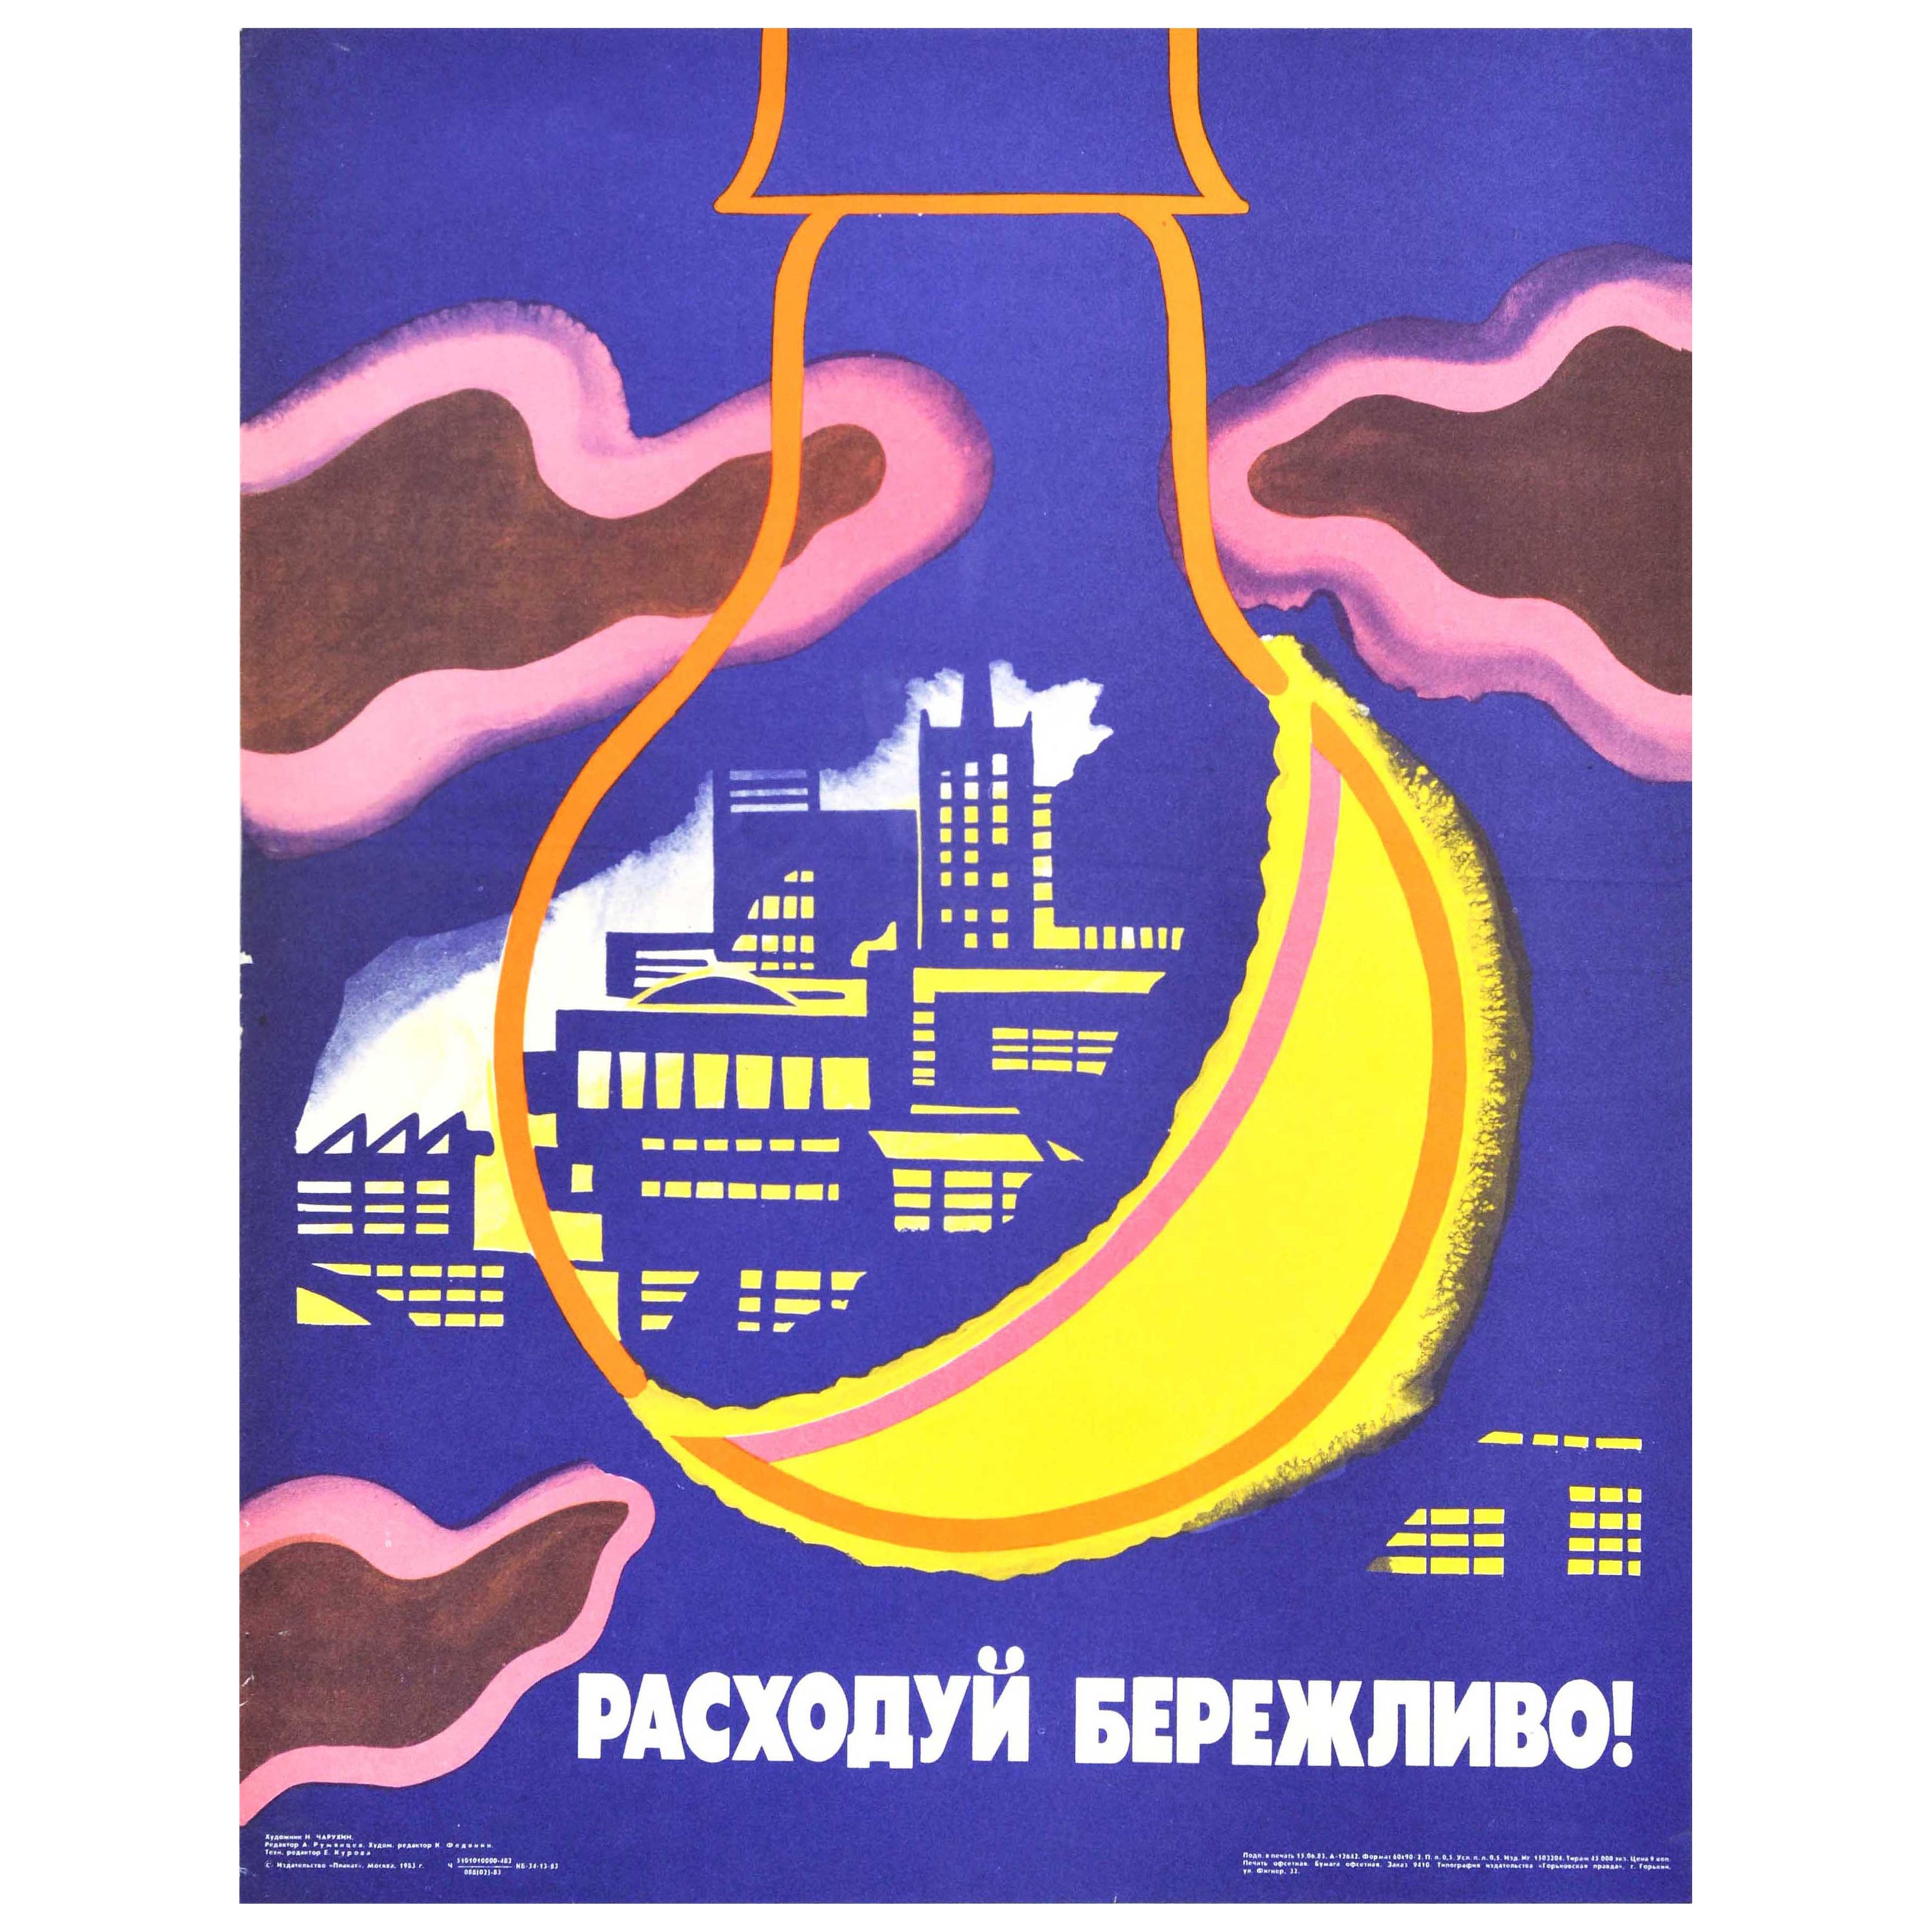 Original Vintage Poster Spend Wisely Save Energy Electricity City Lights Design